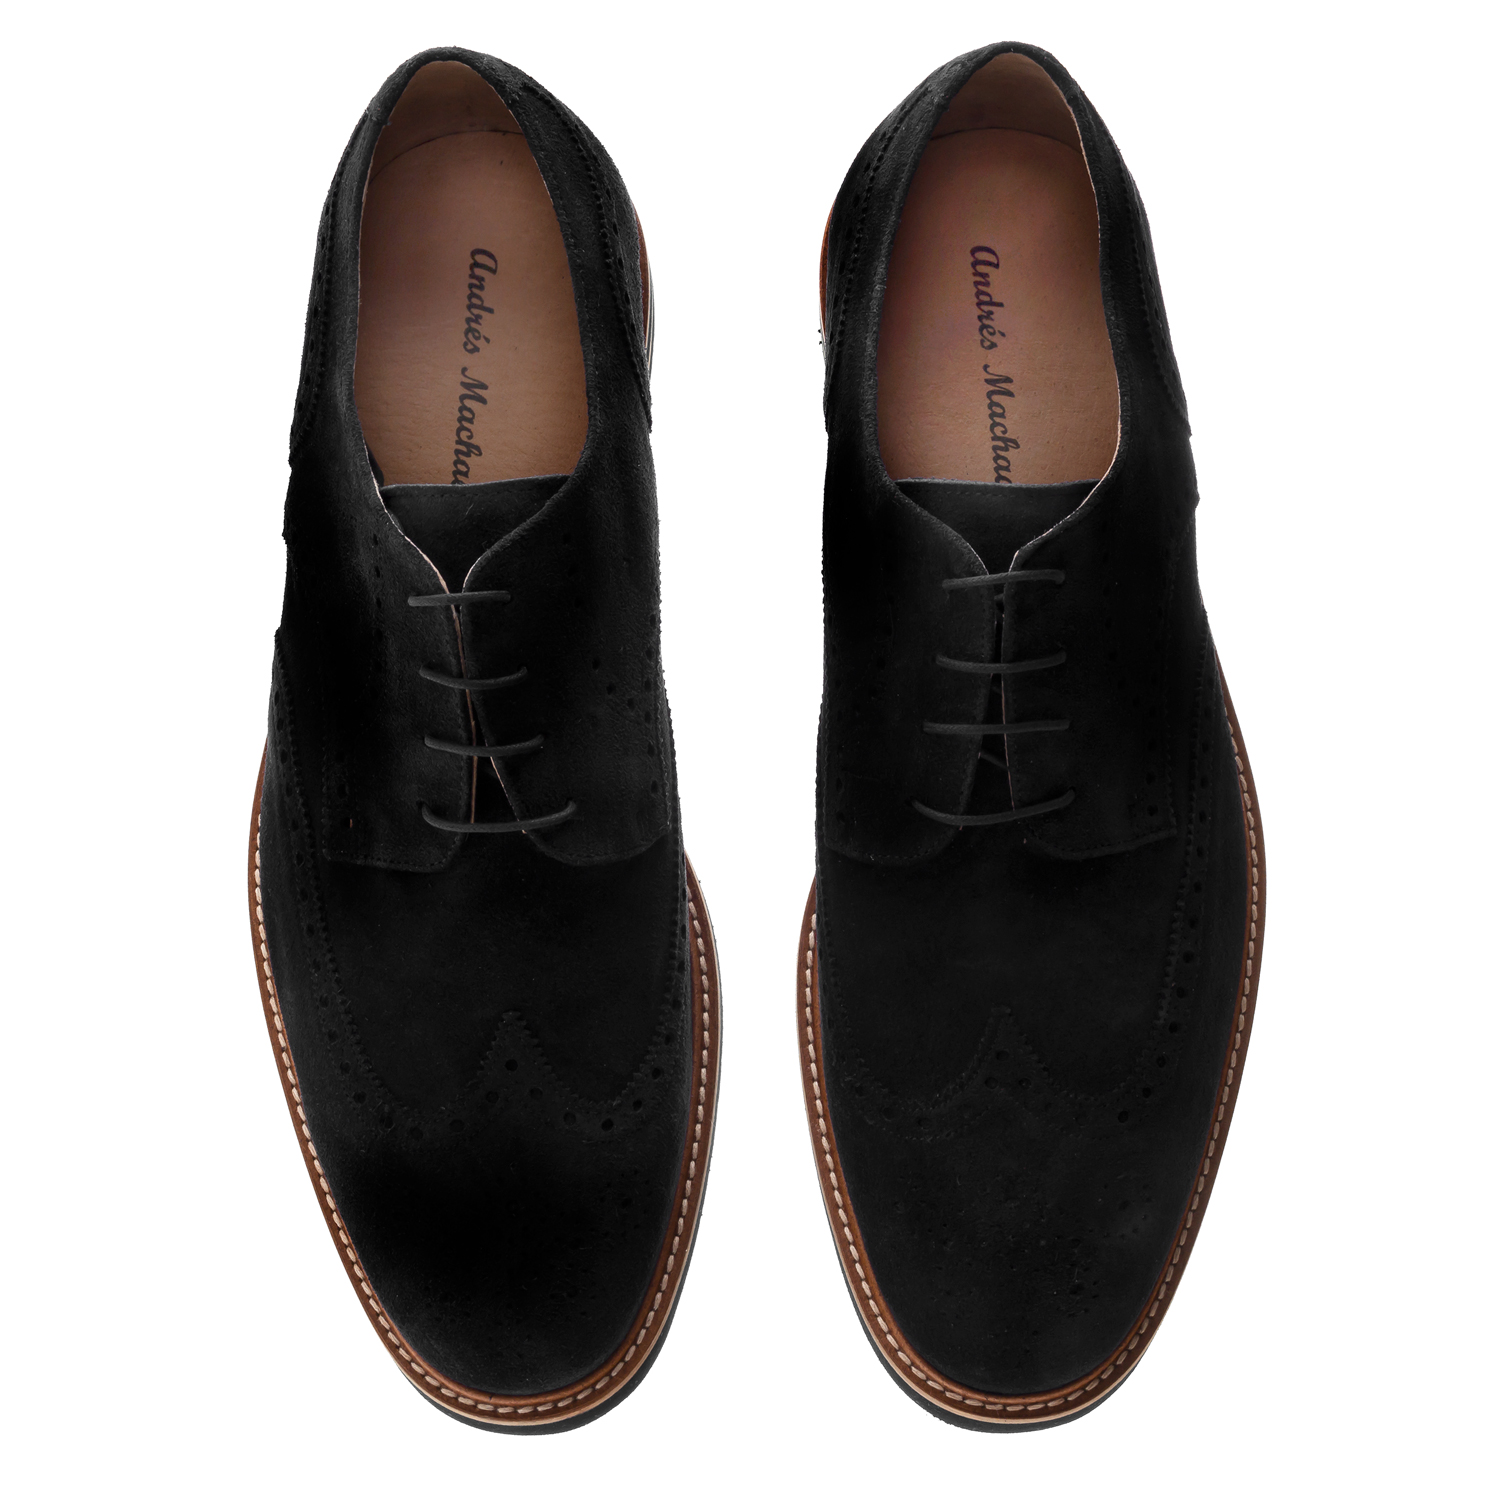 Zapatos estilo Oxford Serraje Negro 